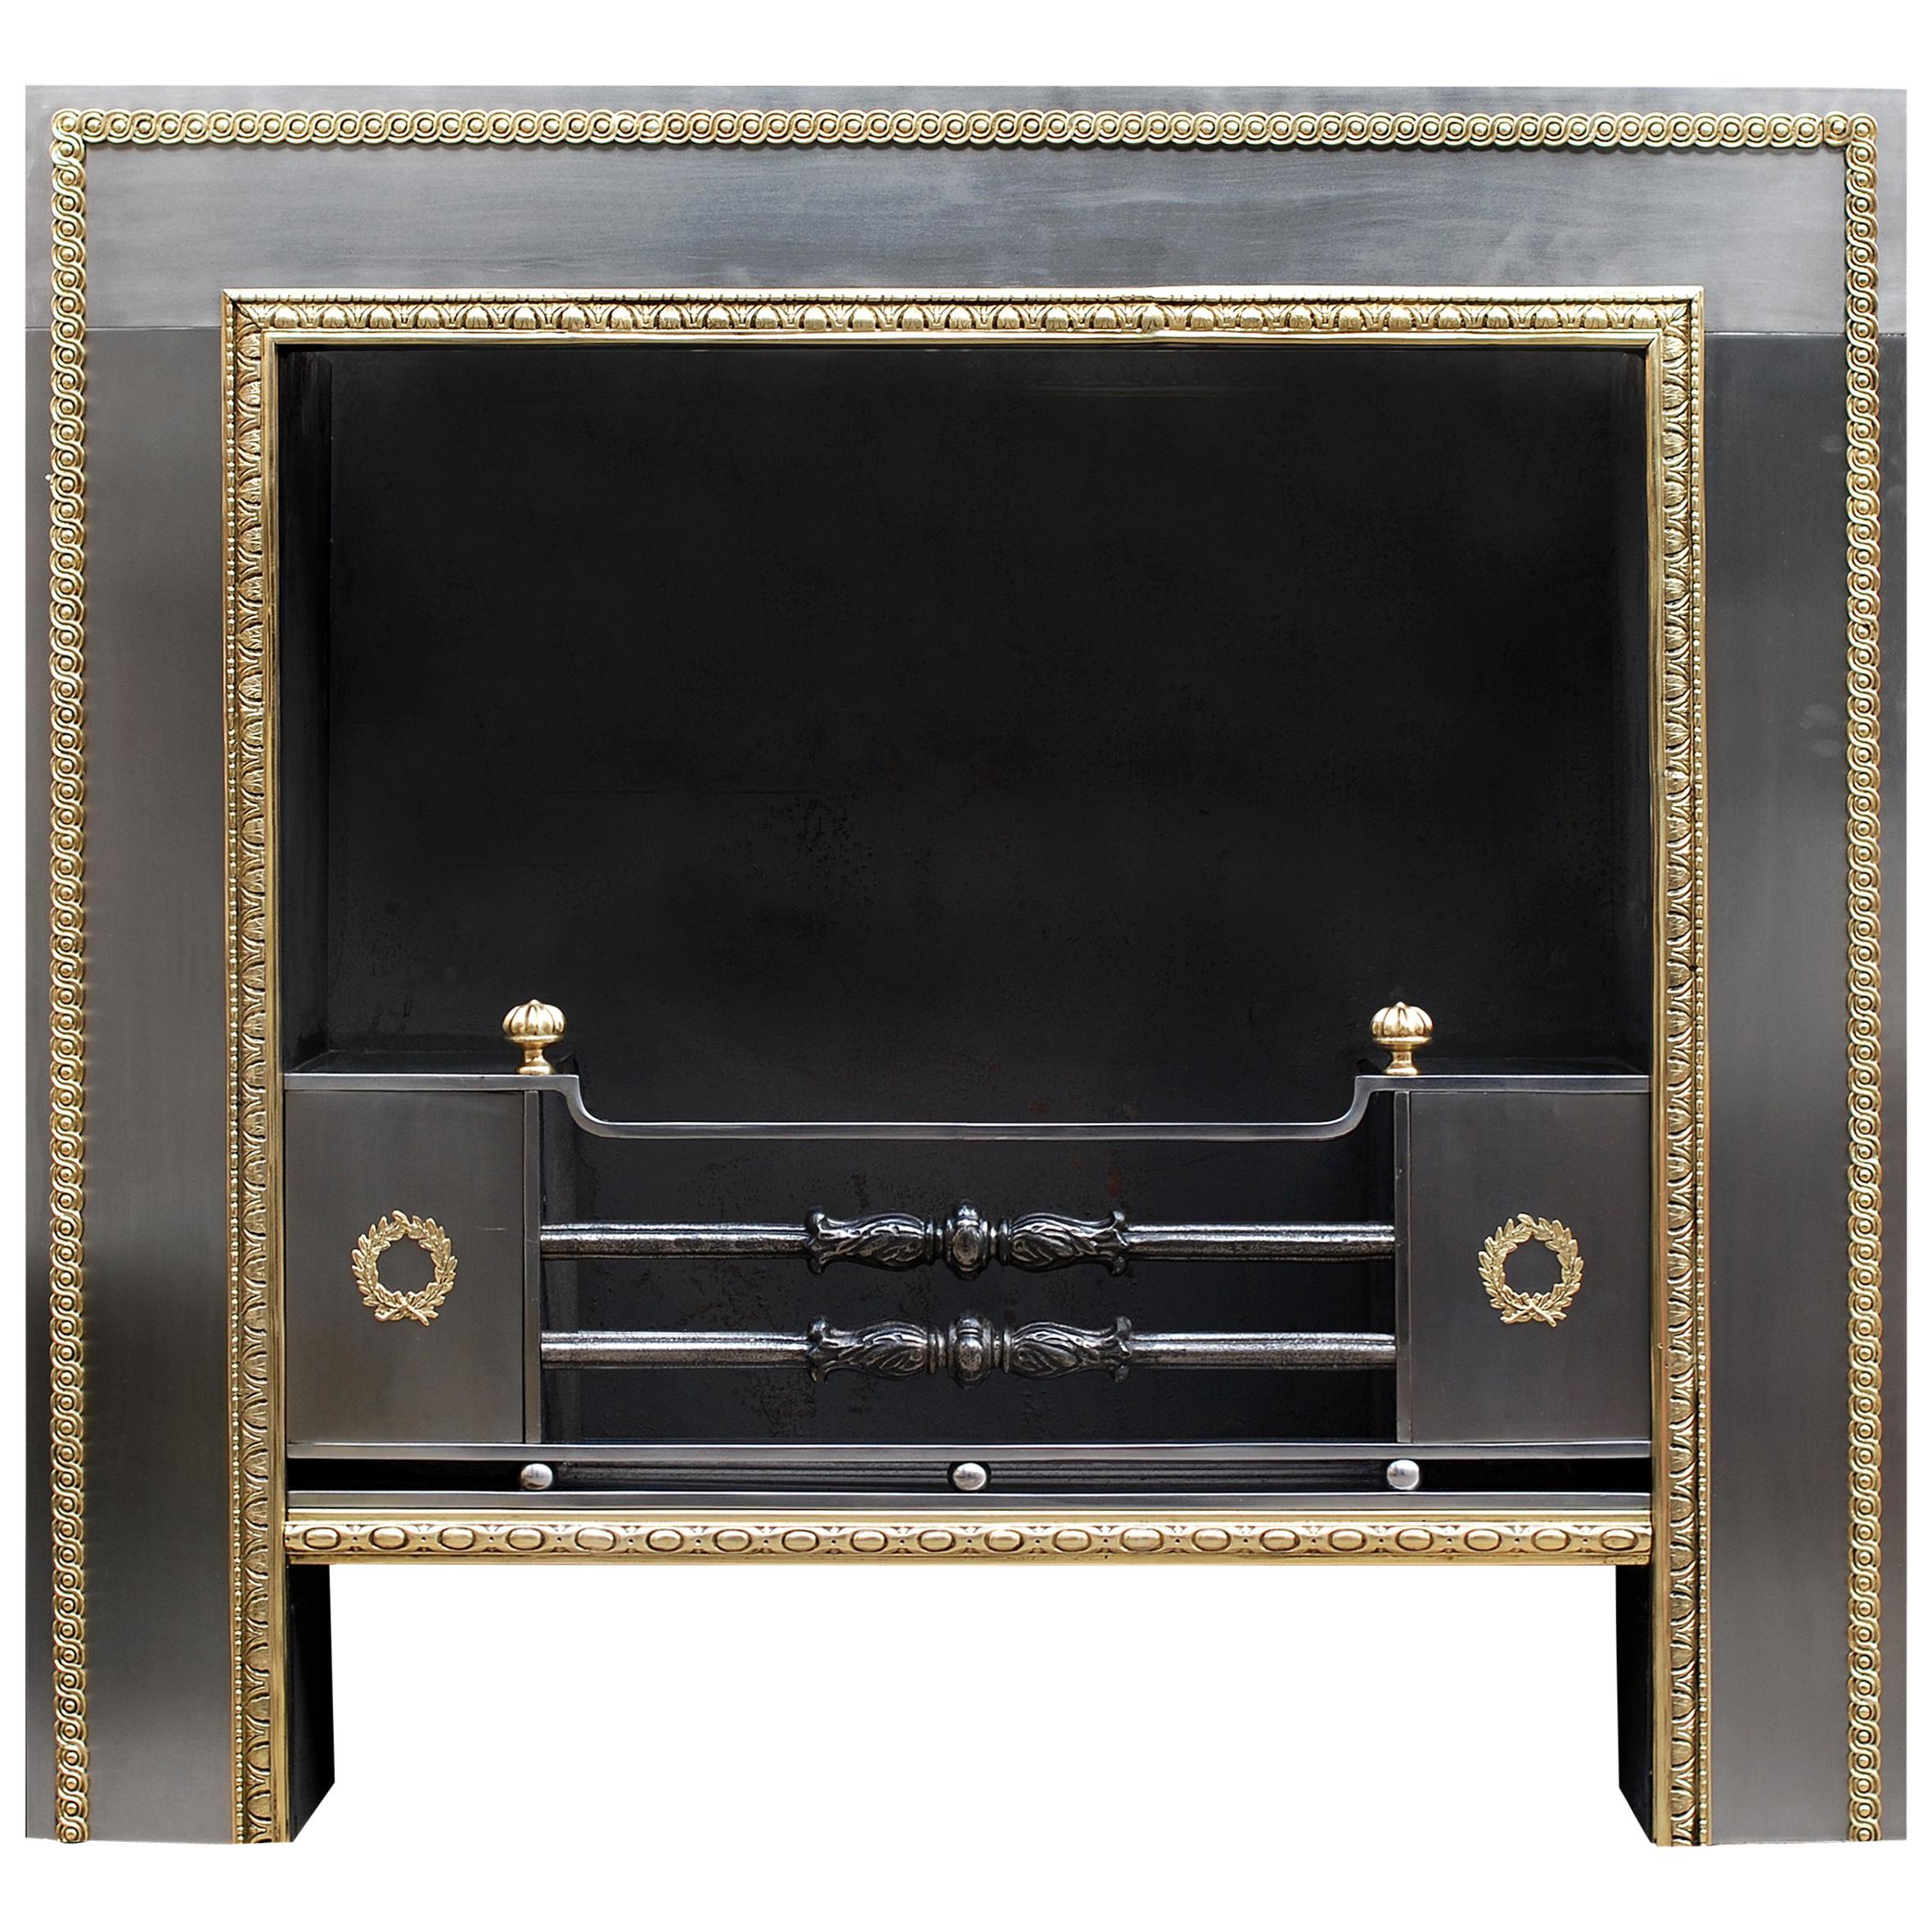 Regency Style Steel and Brass Register Grate